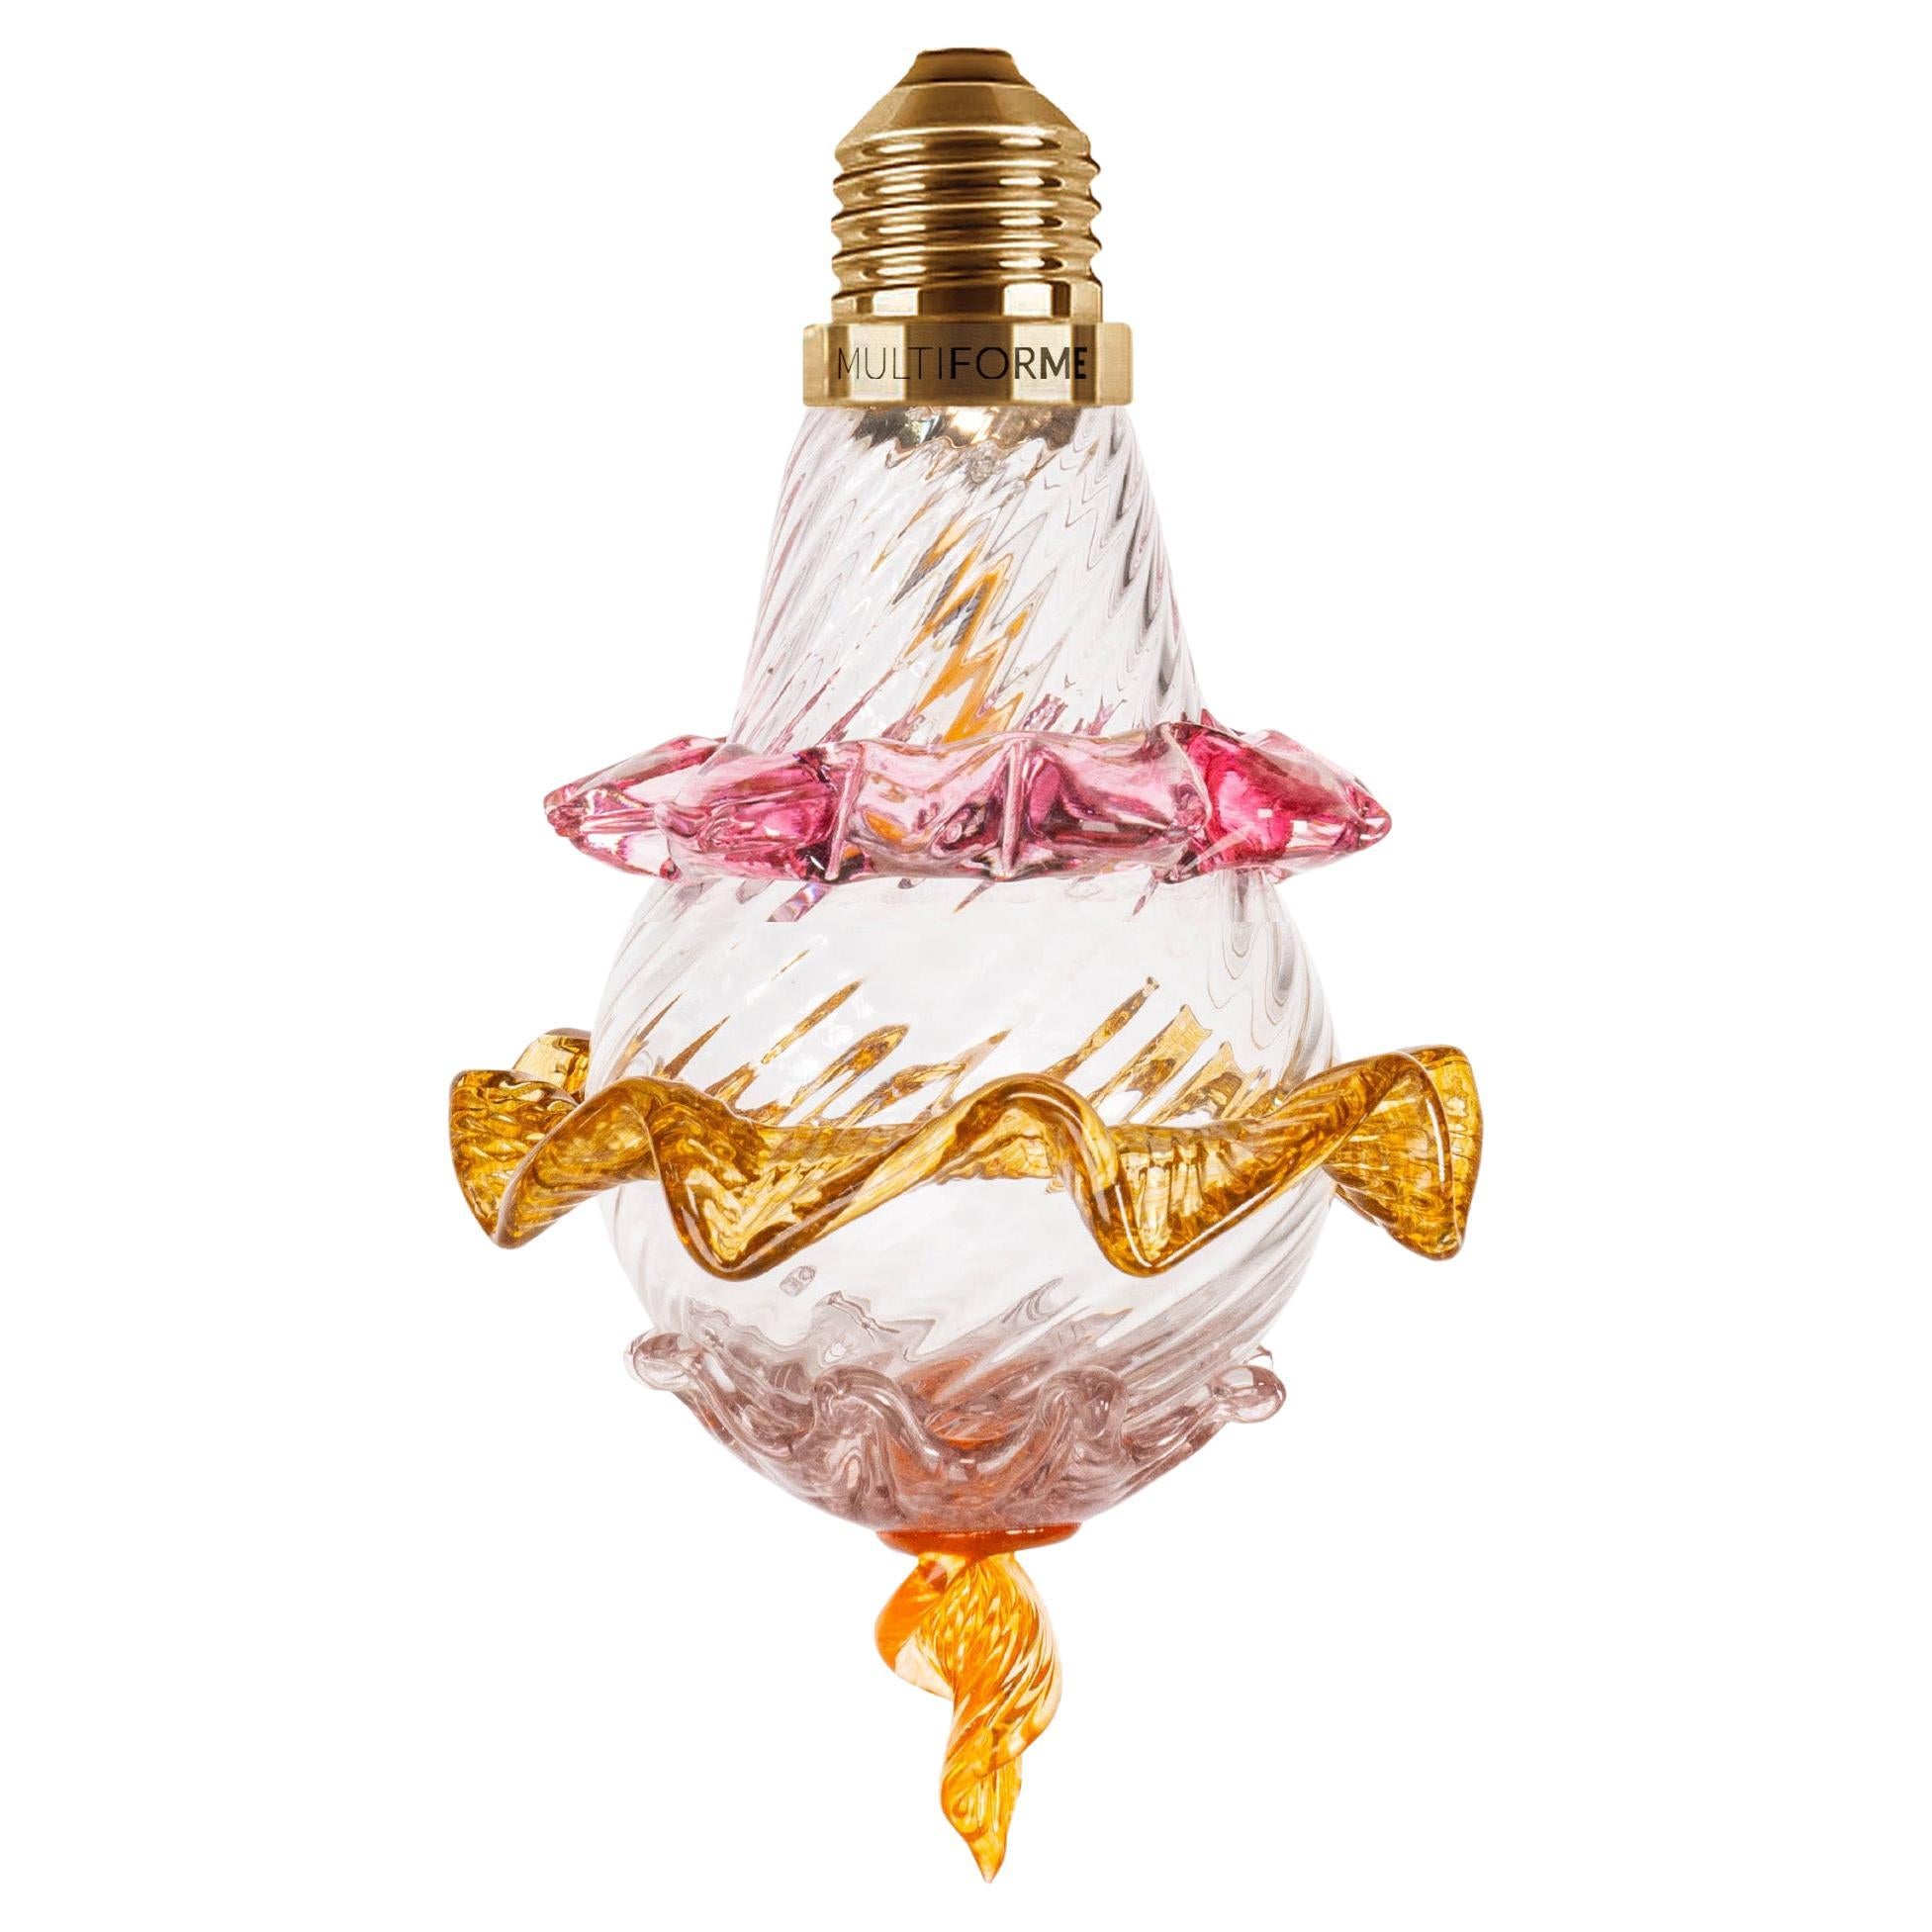 Artistic glass lightbulb chandelier Murano Bulb Marcantonio X Multiforme #09 For Sale